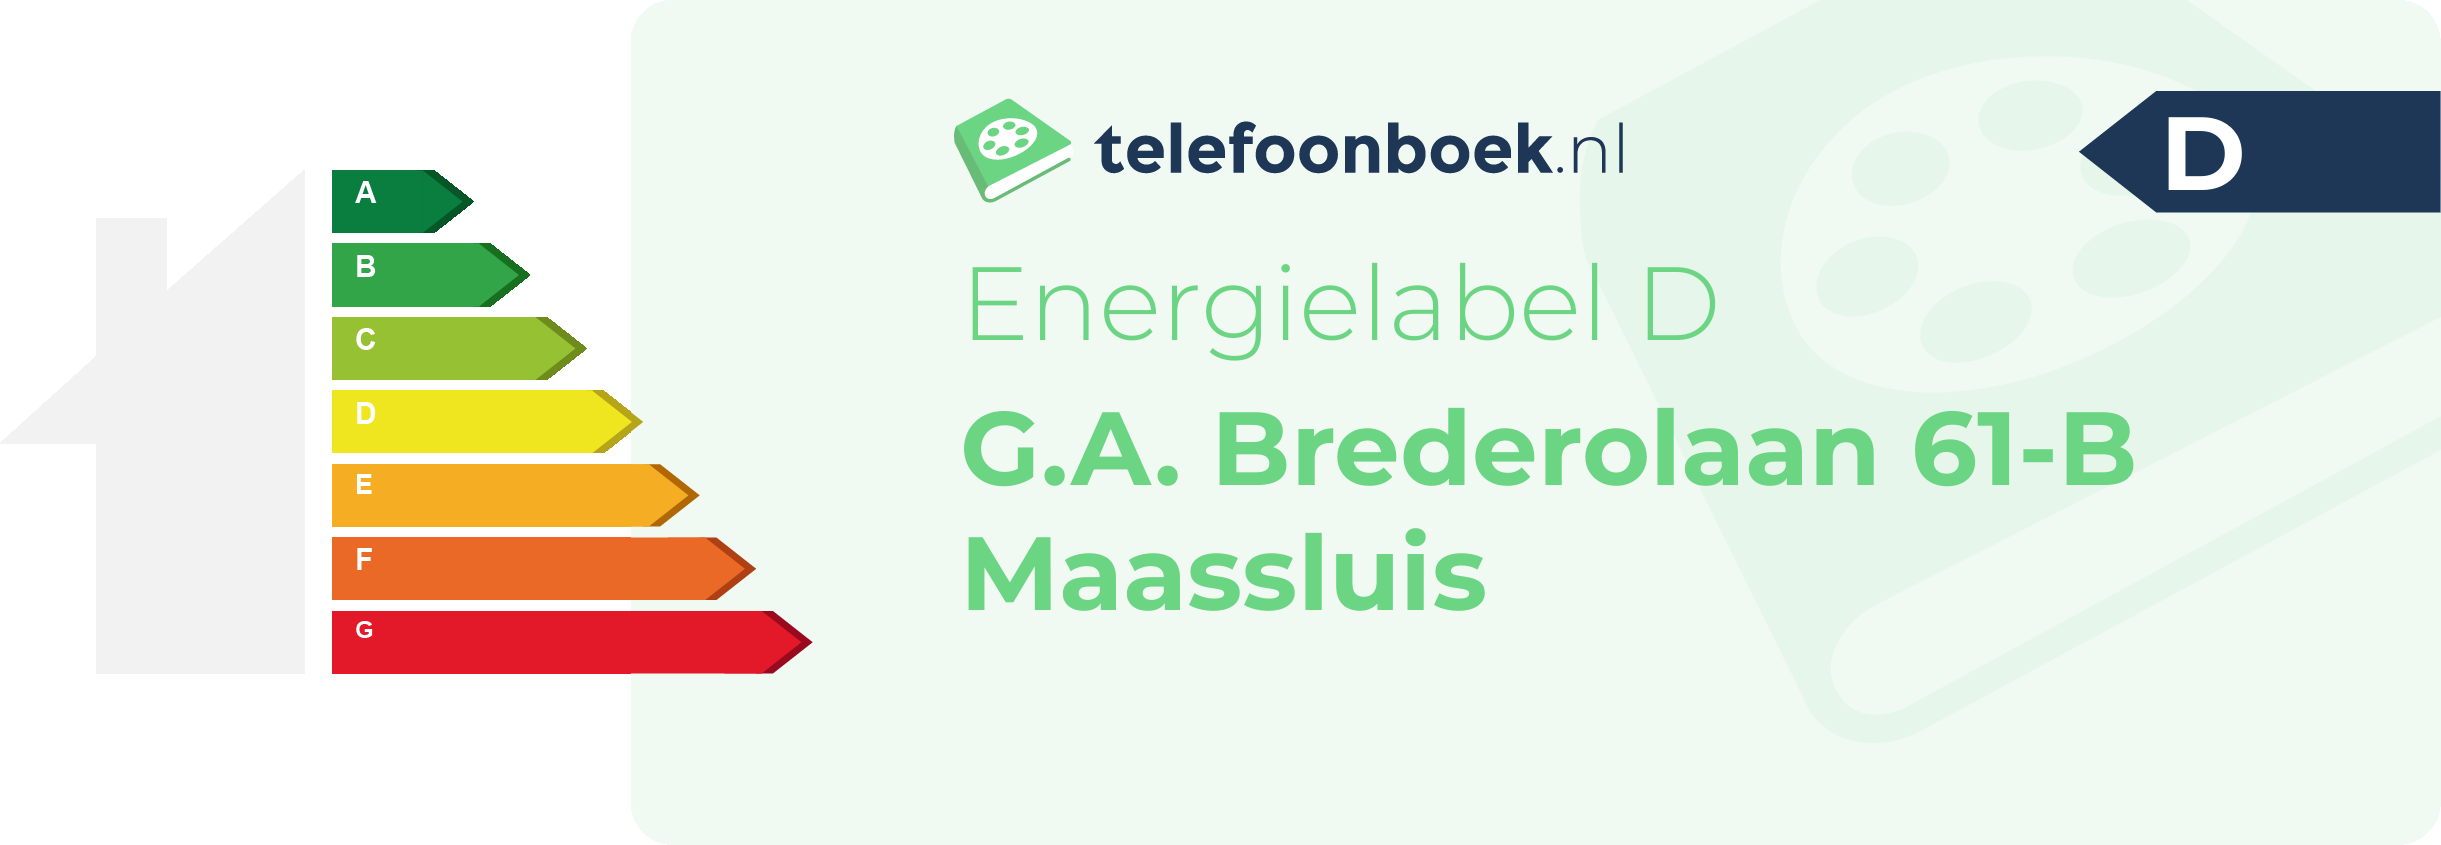 Energielabel G.A. Brederolaan 61-B Maassluis